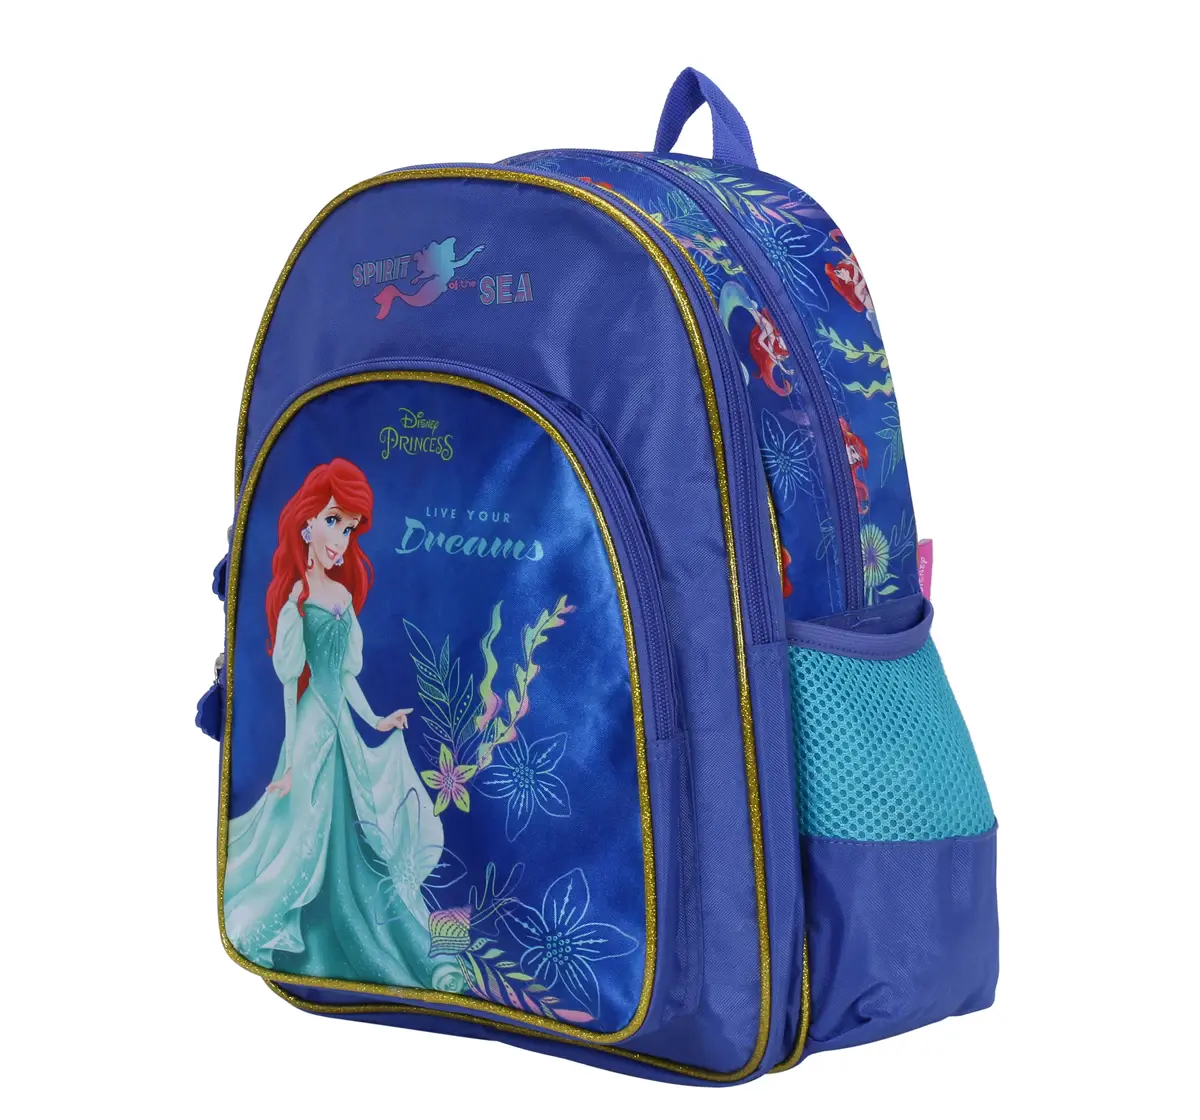 Simba Princess Live Your Dreams 16 Backpack Multicolor 3Y+